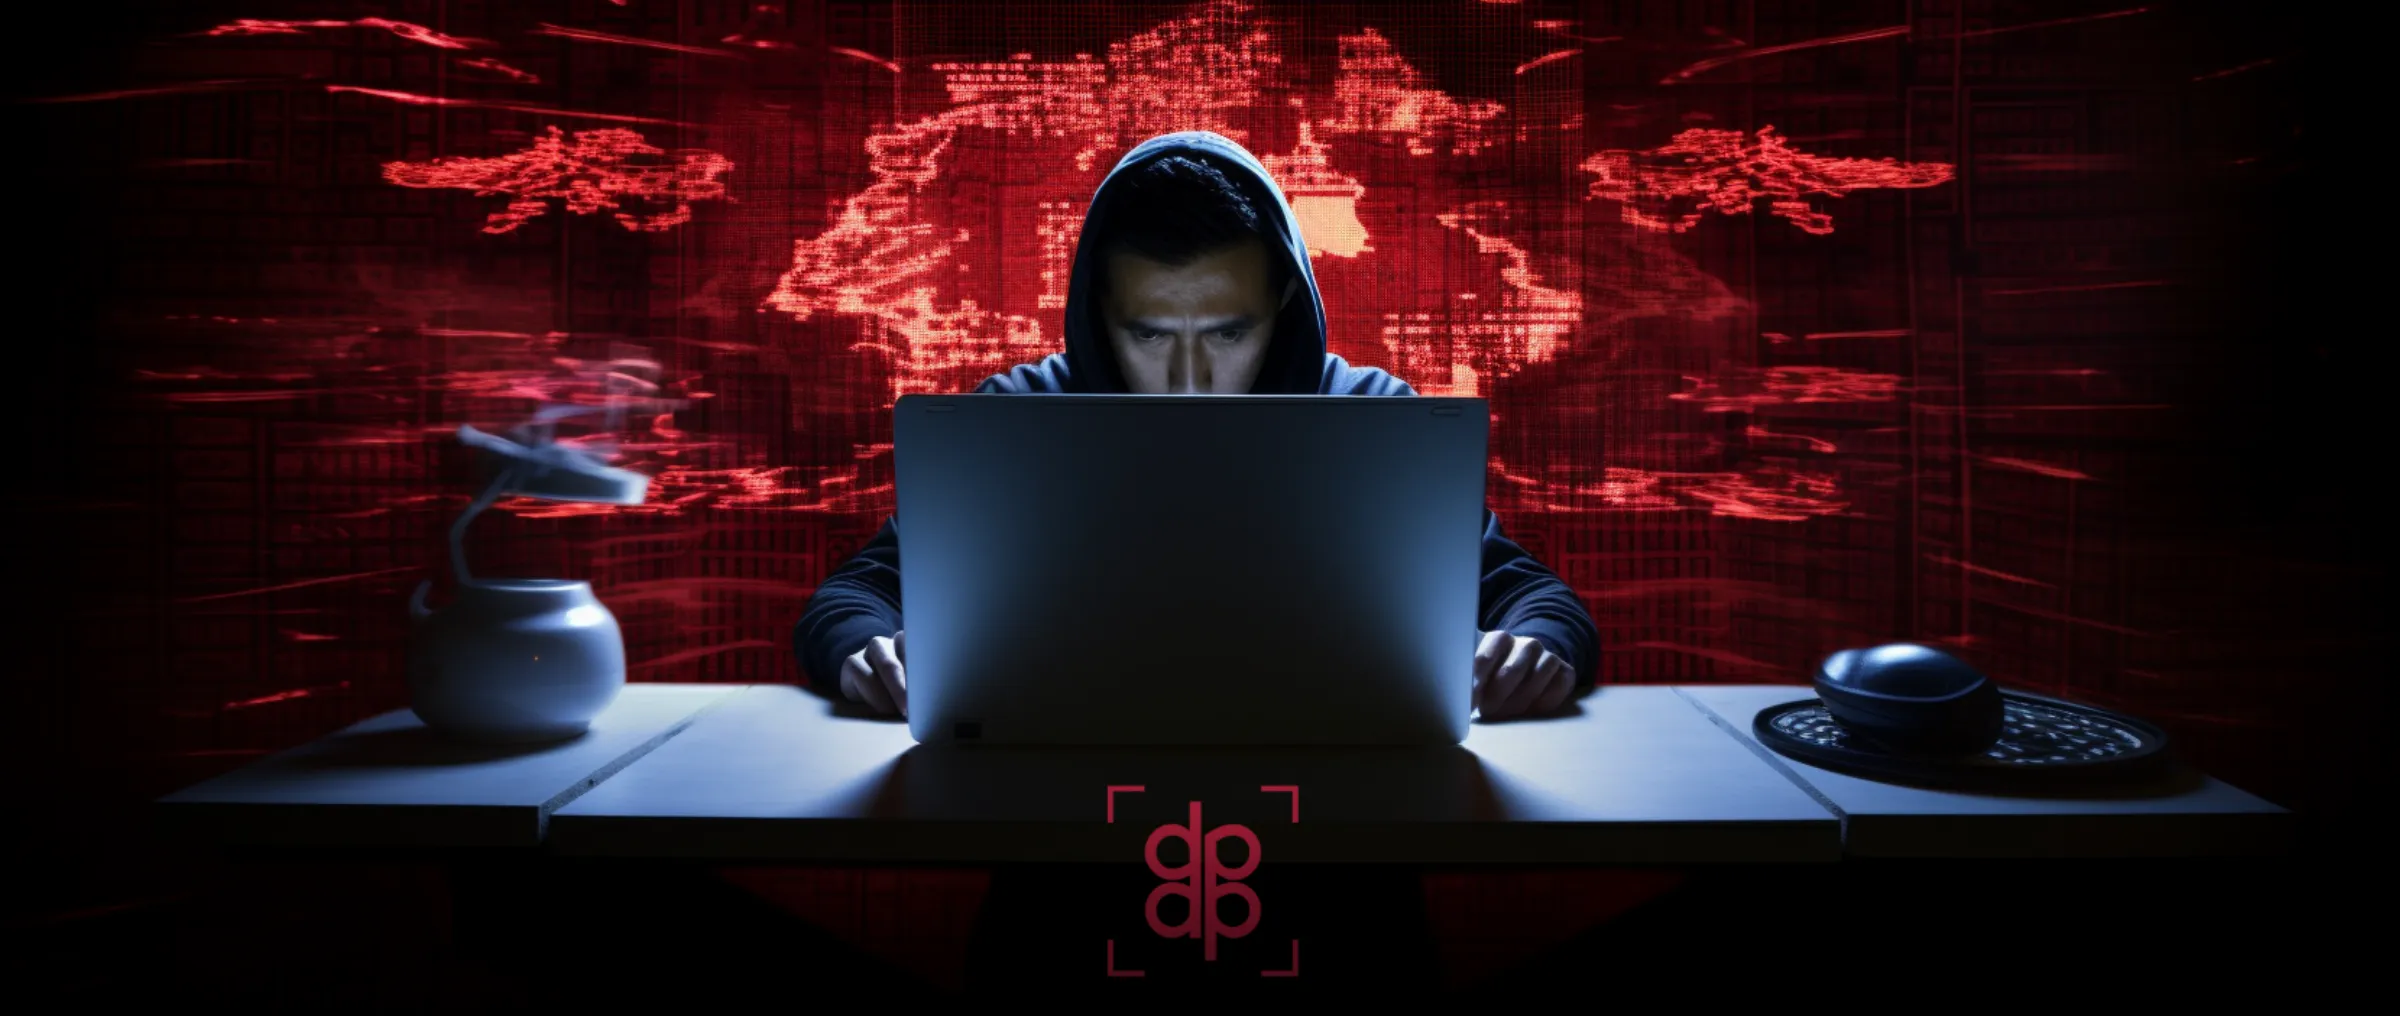 China reports progress in hacker crime crackdown